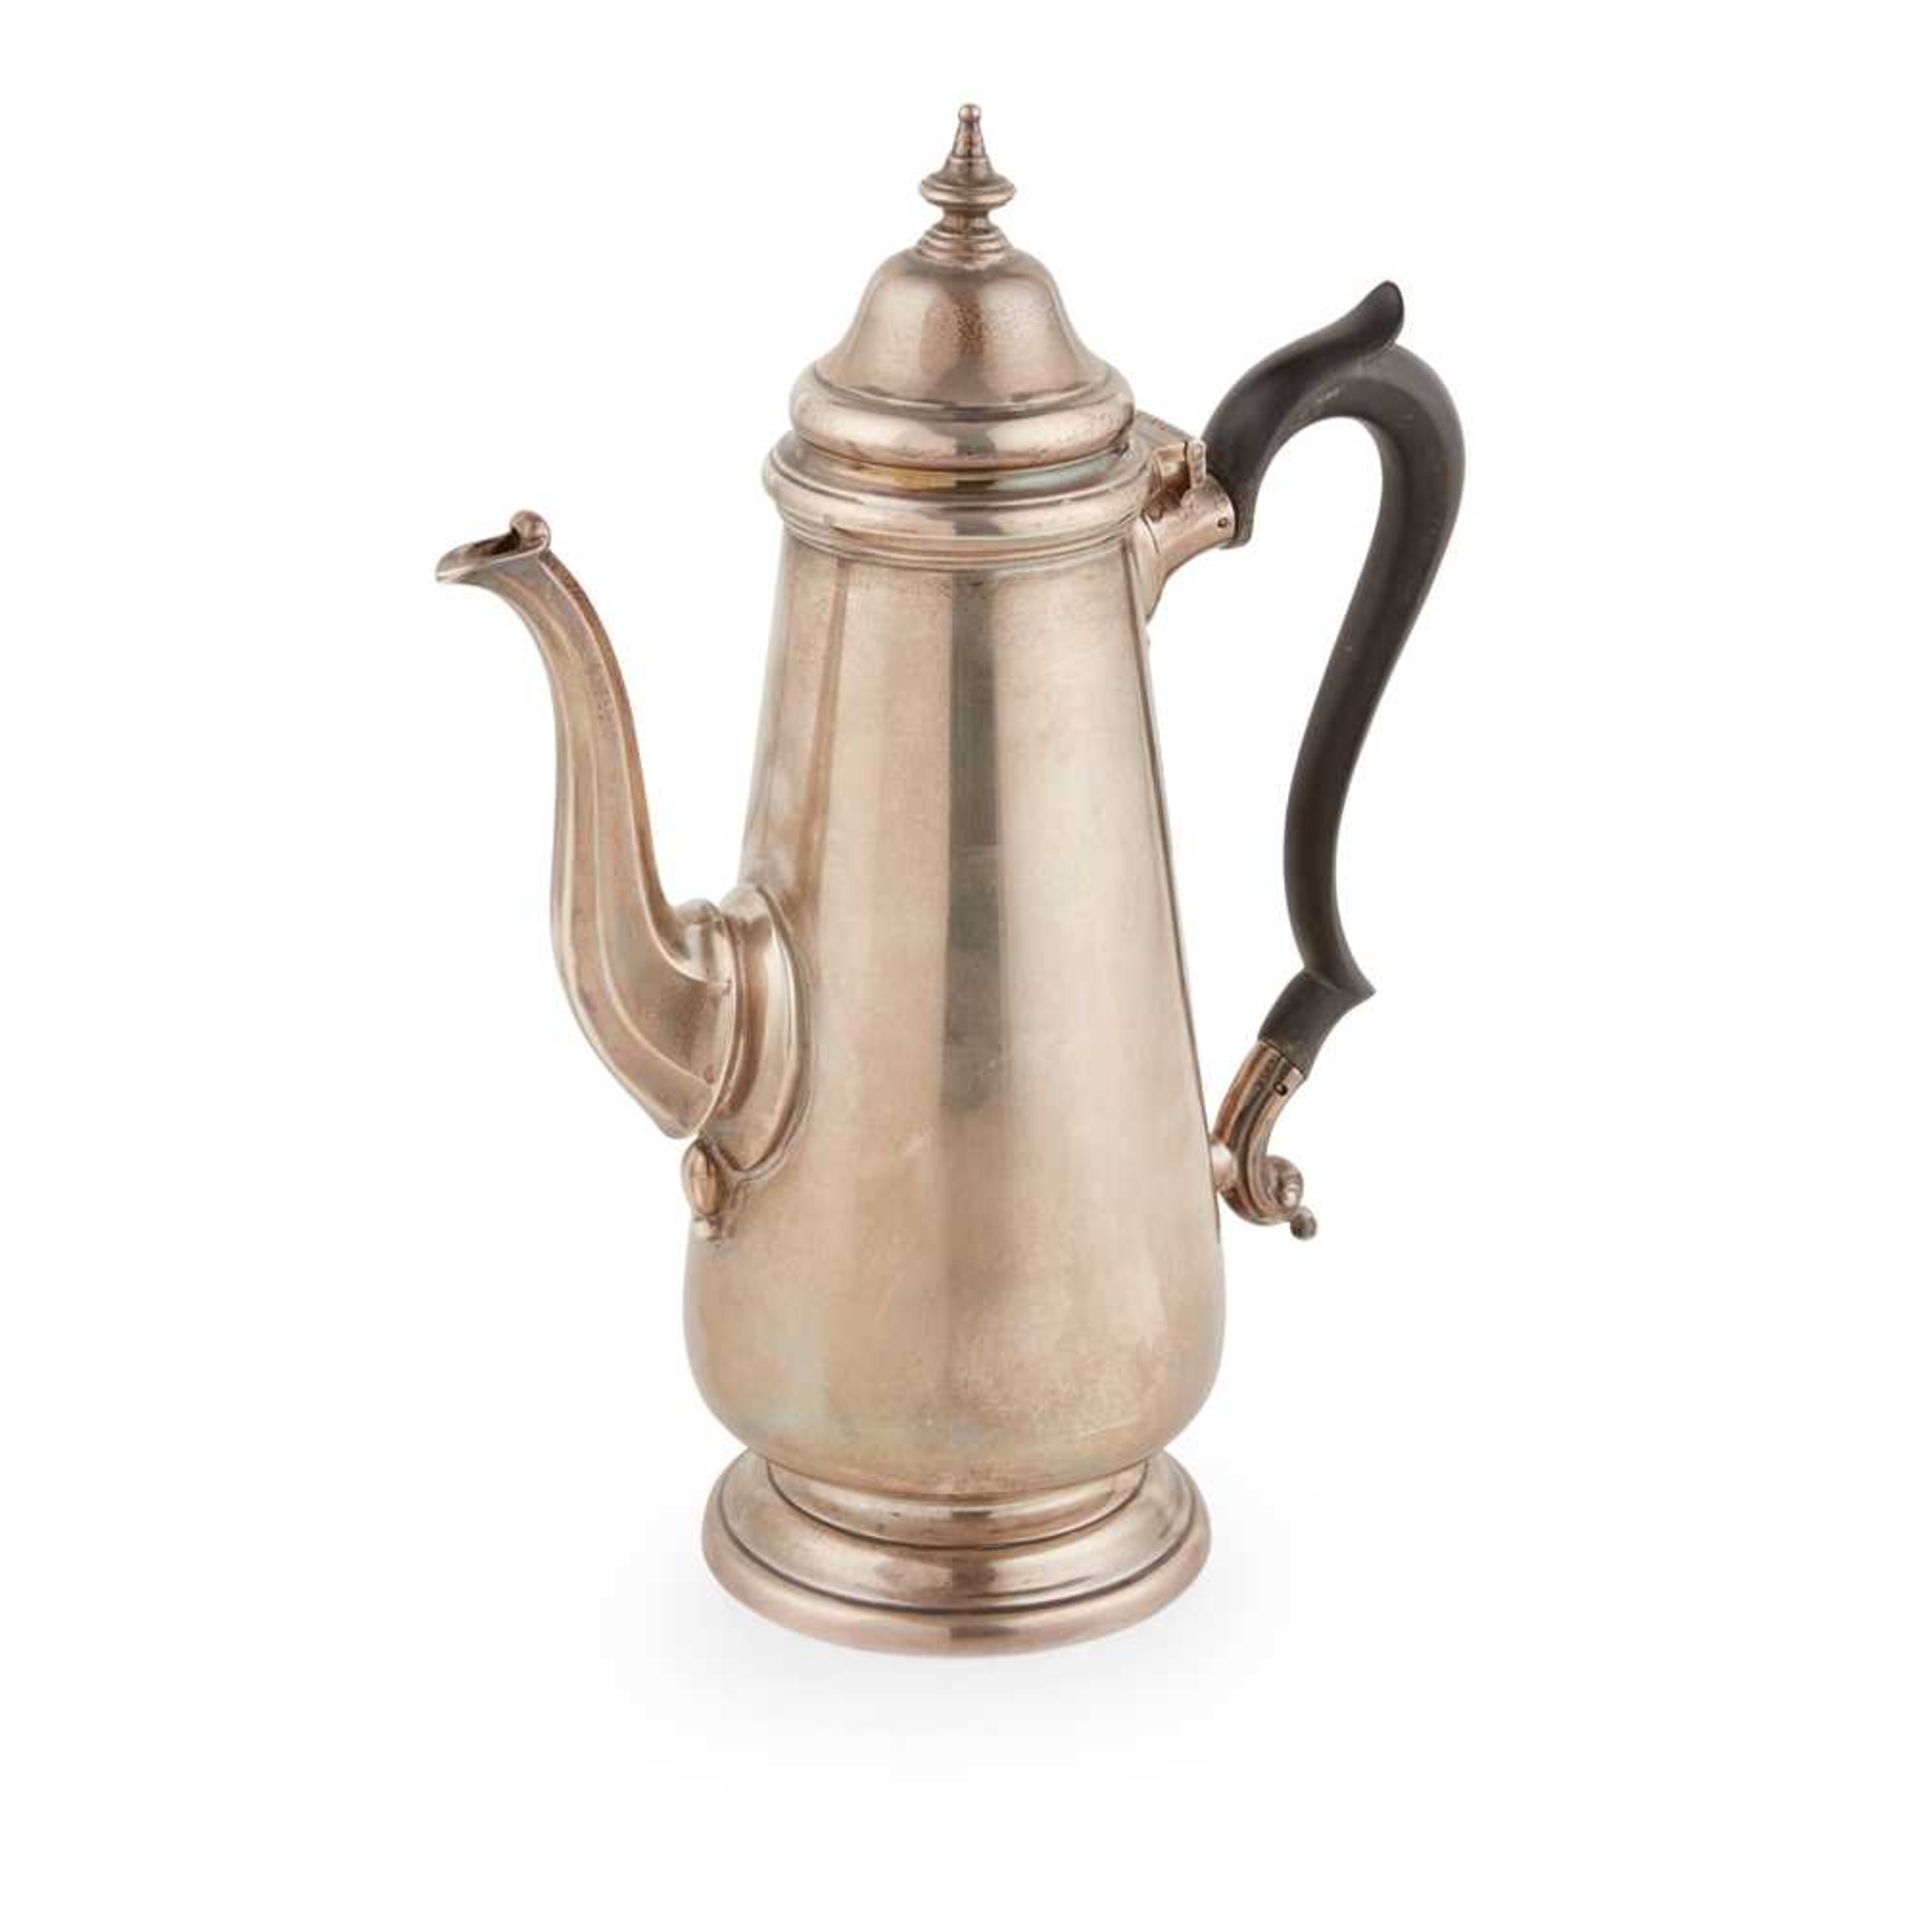 A Georgian style coffee pot